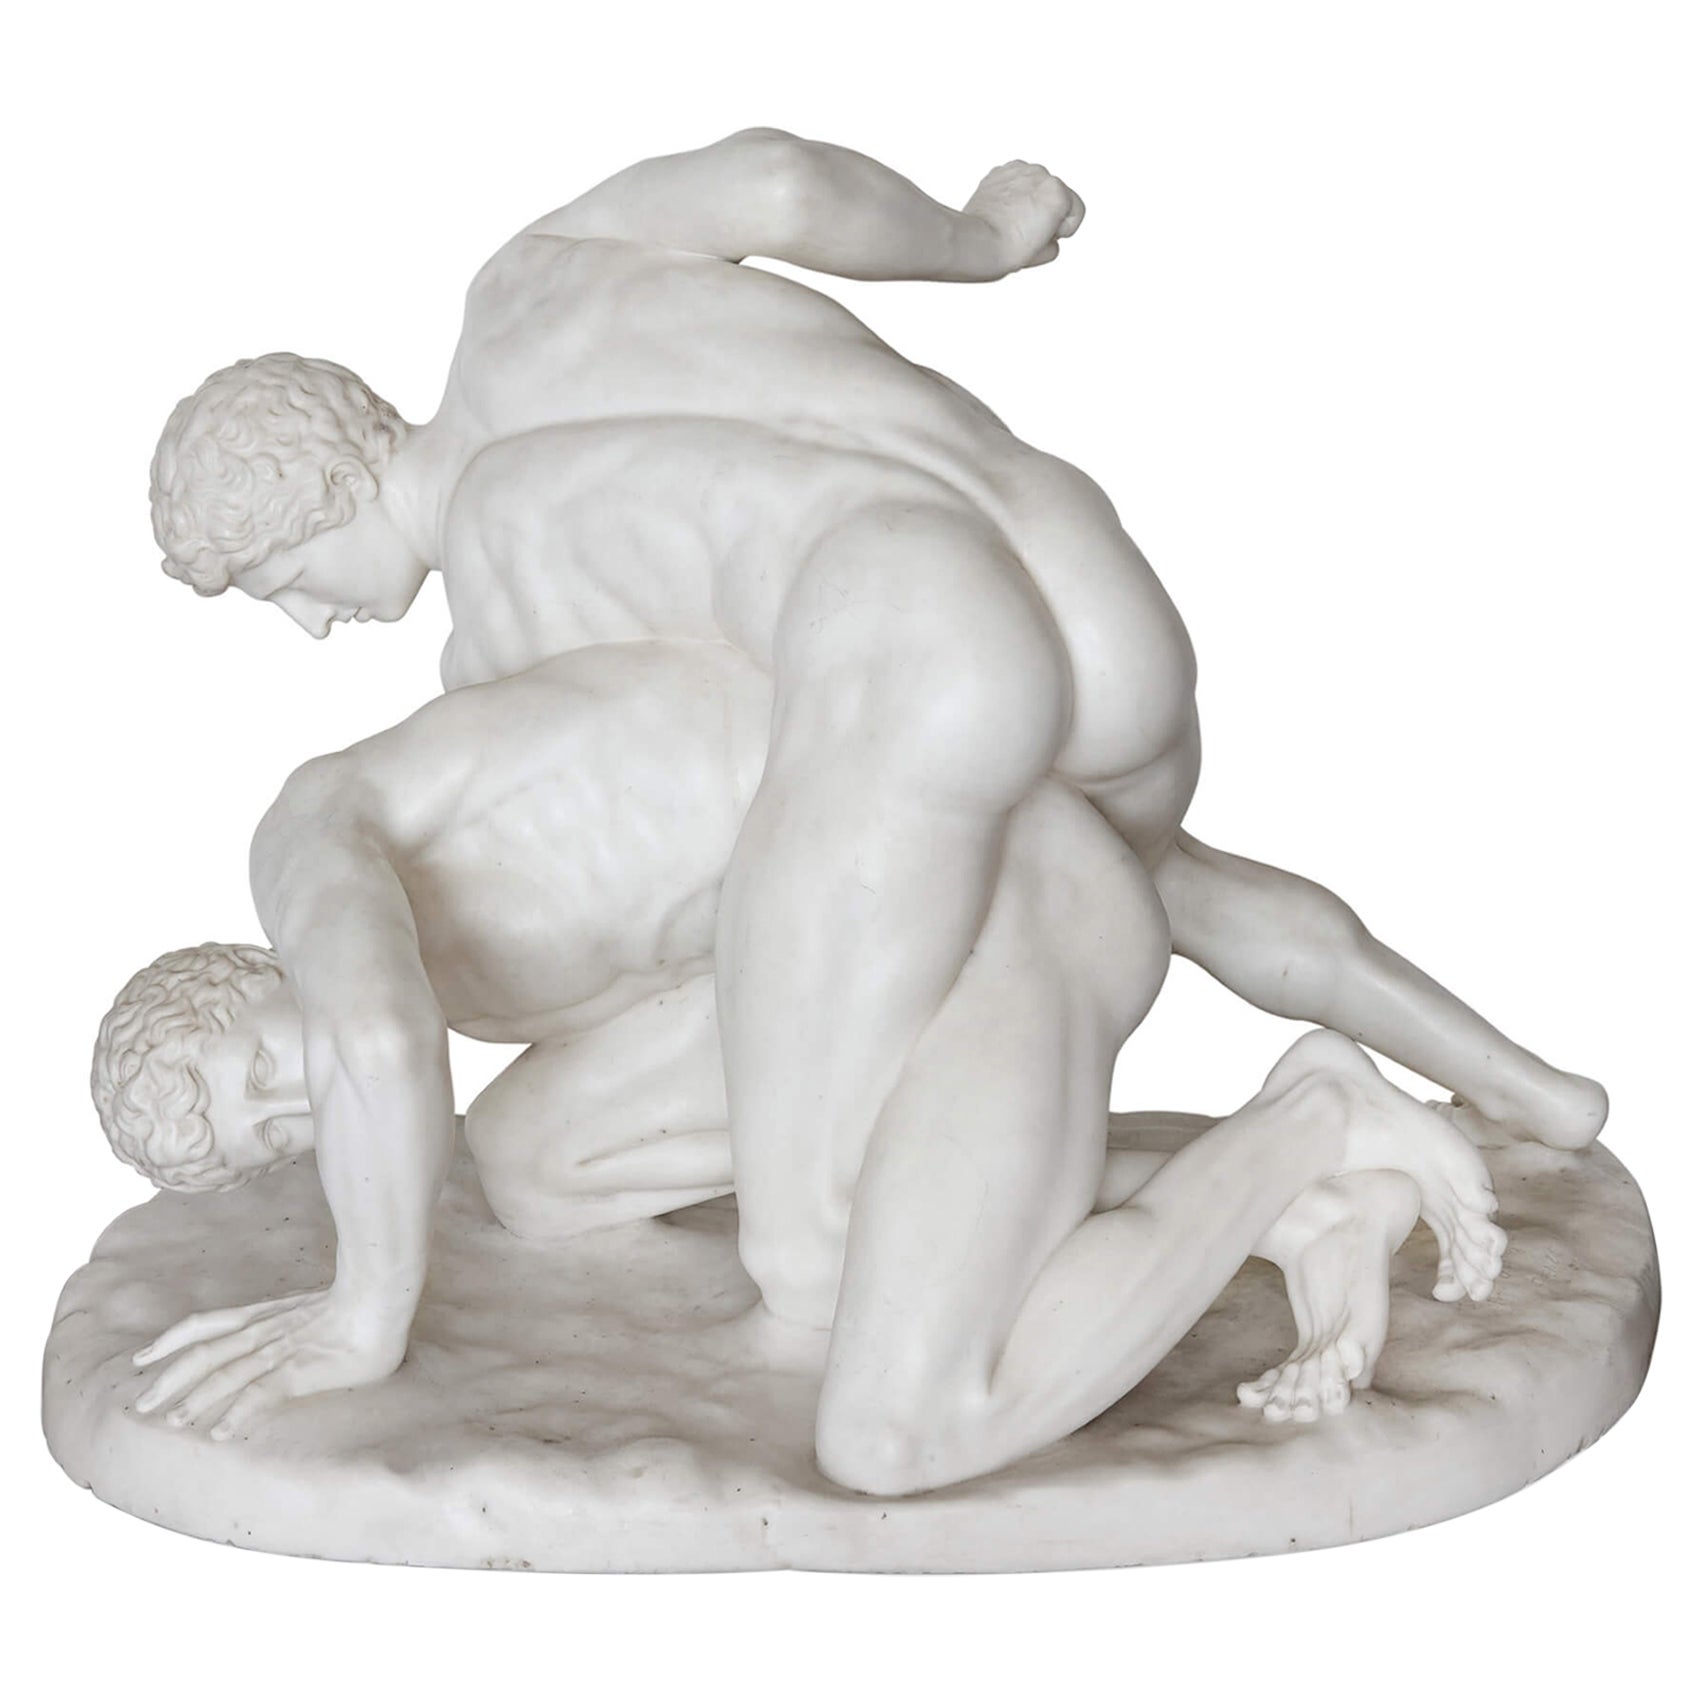 Antique Italian Marble Sculpture after Roman Original of the Wrestlers